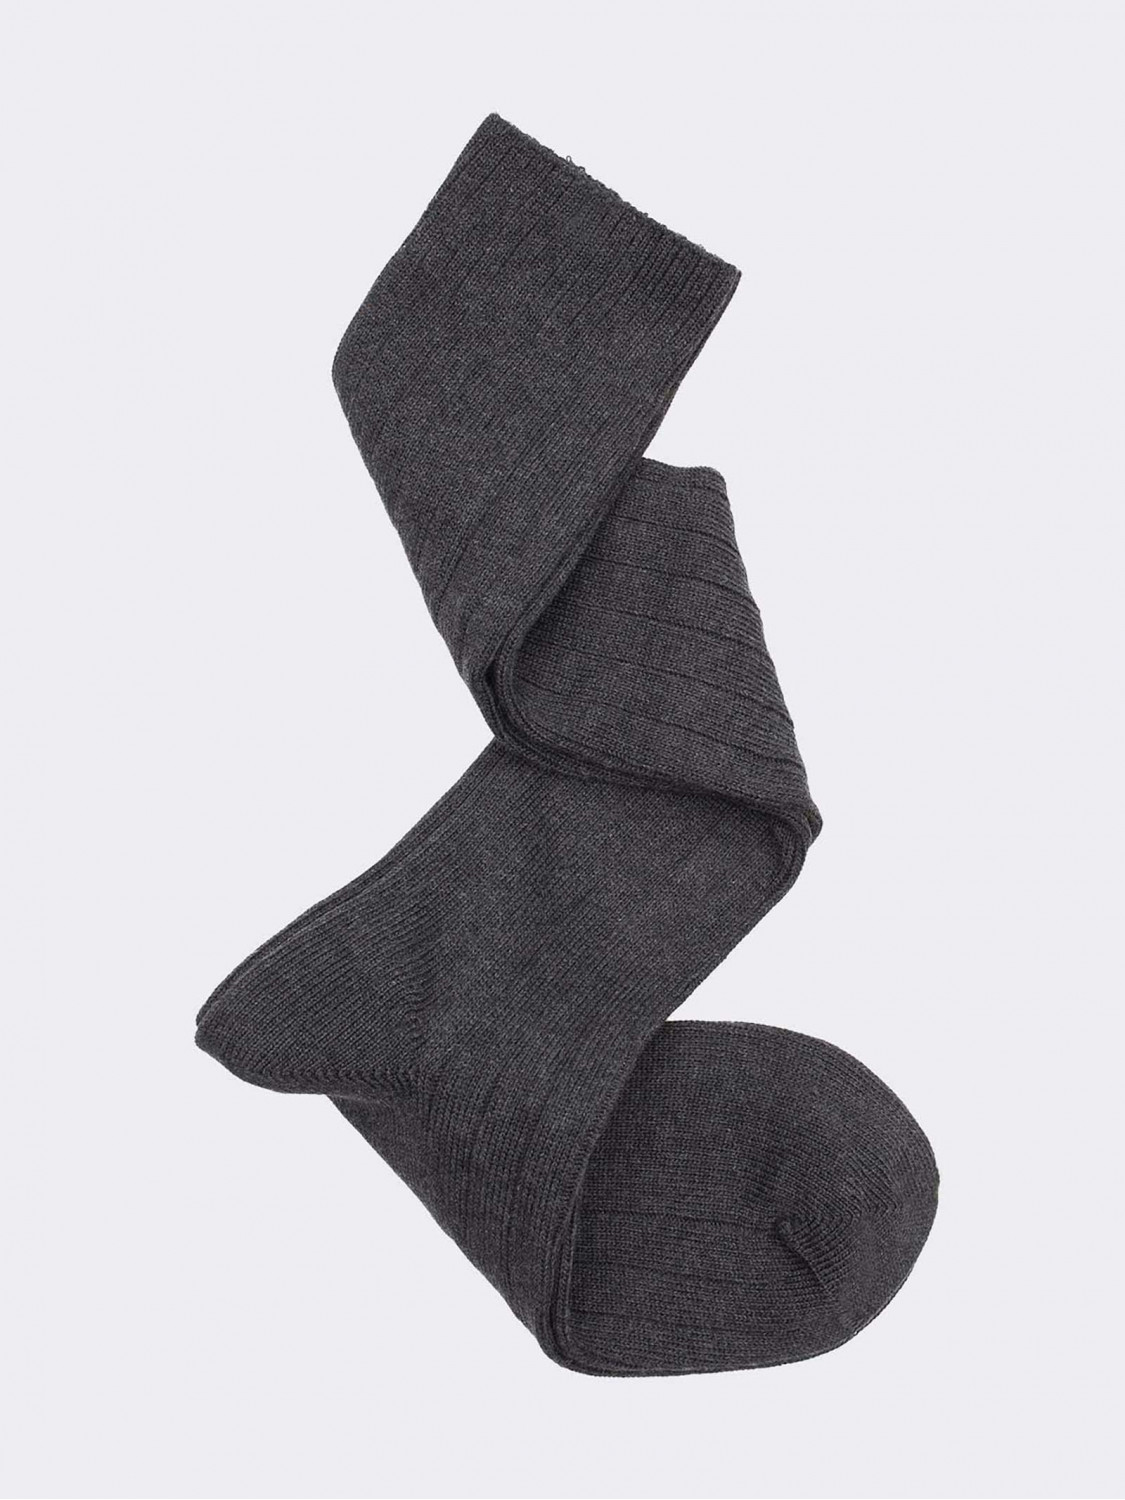 Long classic rib socks - warm cotton Made in Italy